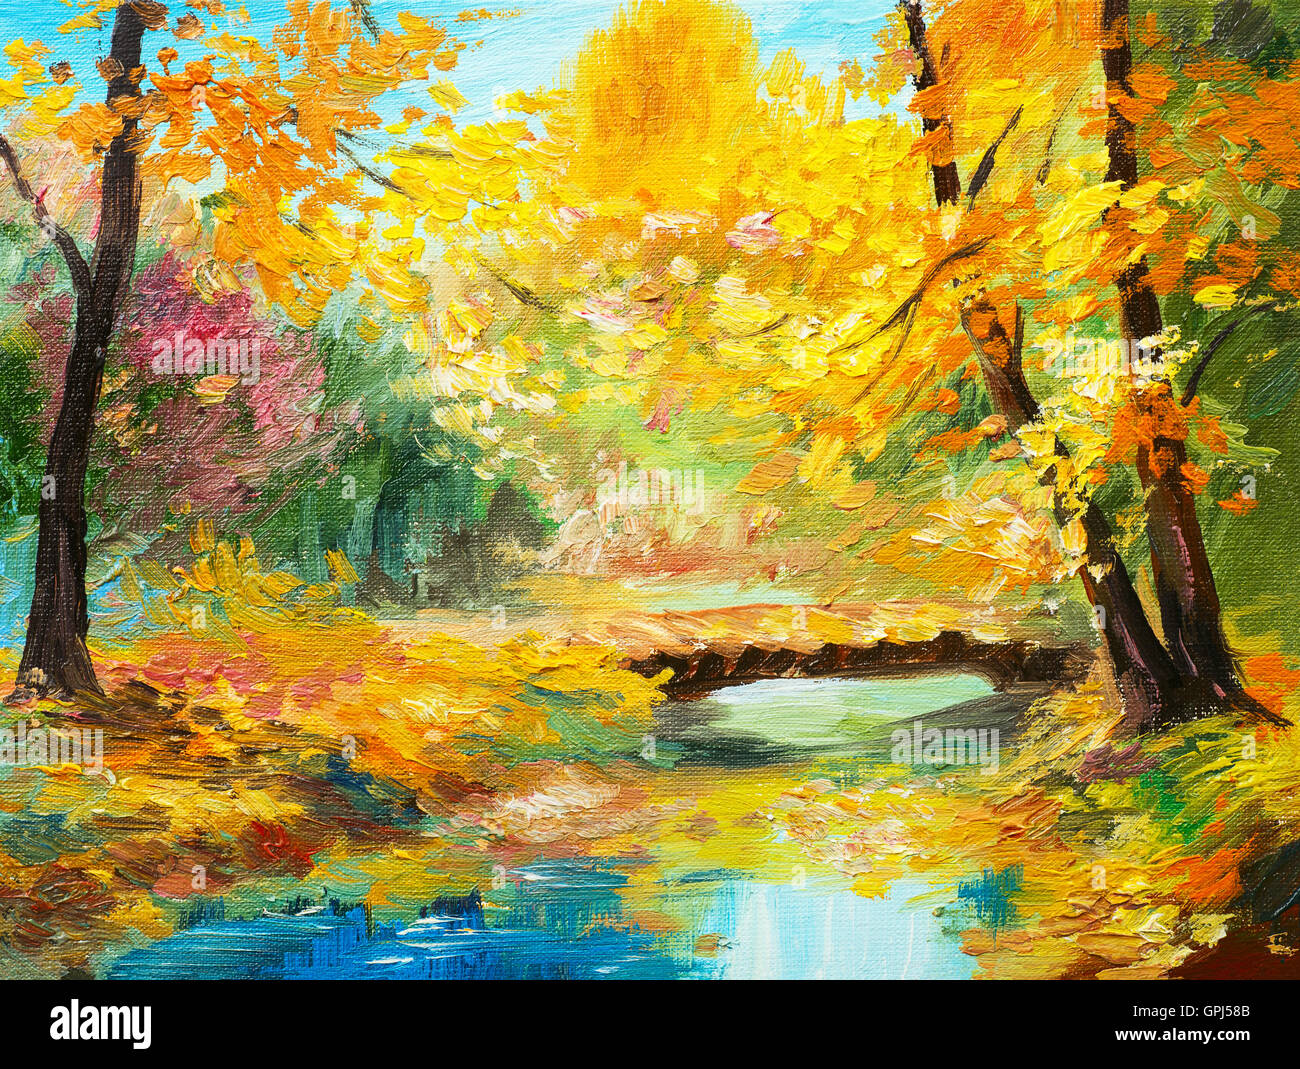 Ölgemälde Landschaft - bunten Herbstwald, schönen Fluss Stockfoto